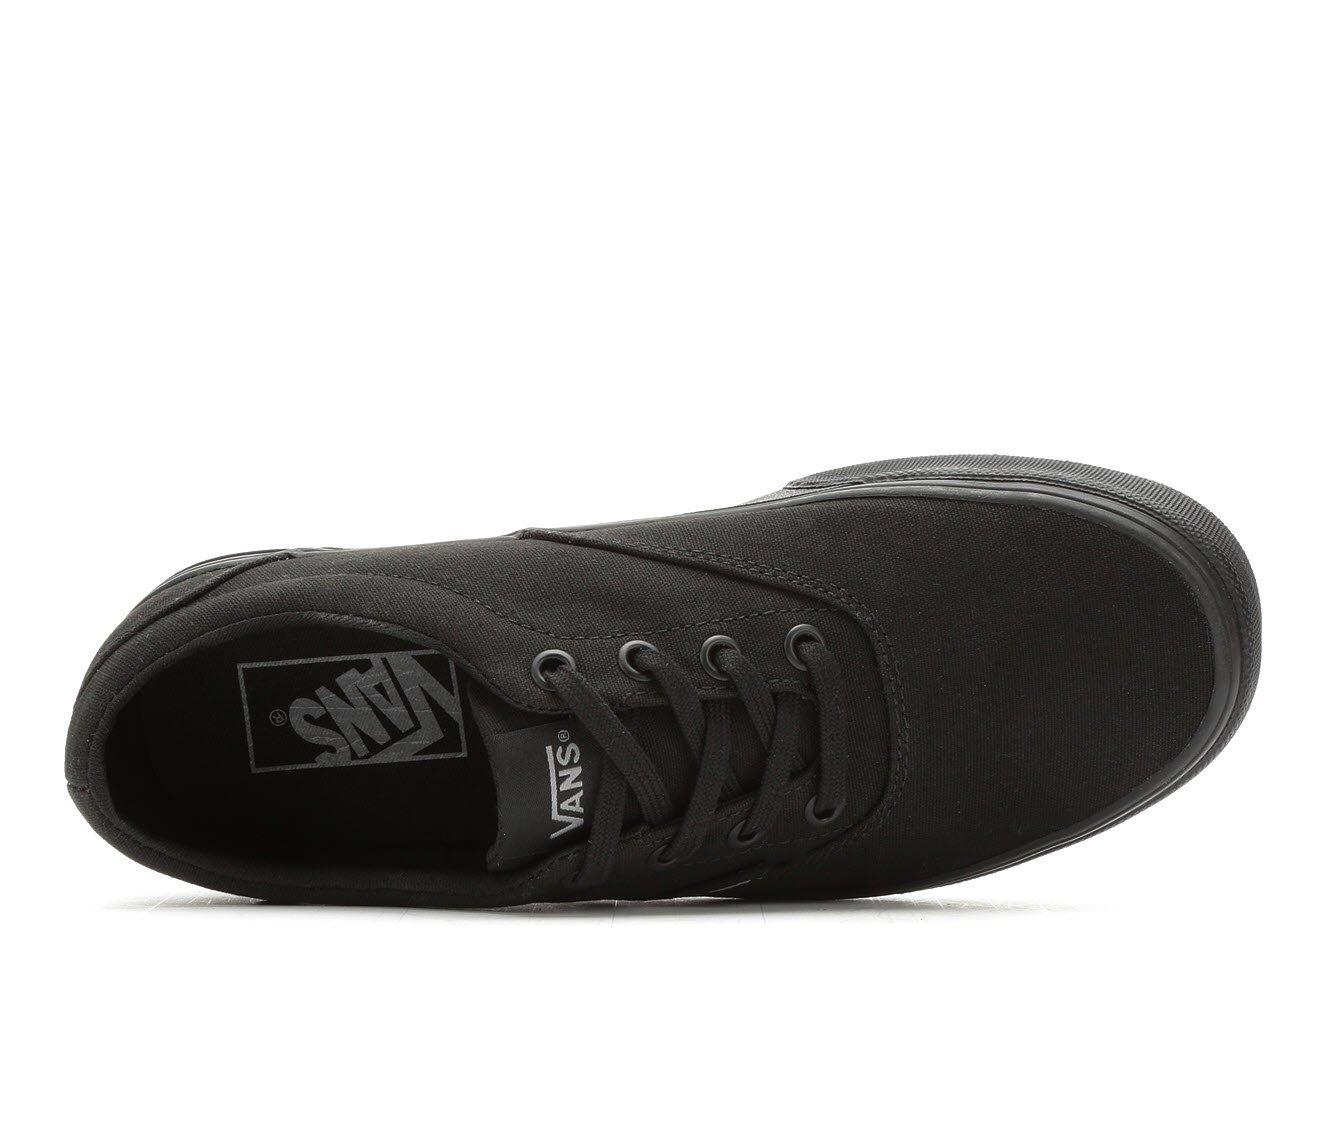 Vans Doheny Sneaker - Women's - Free Shipping